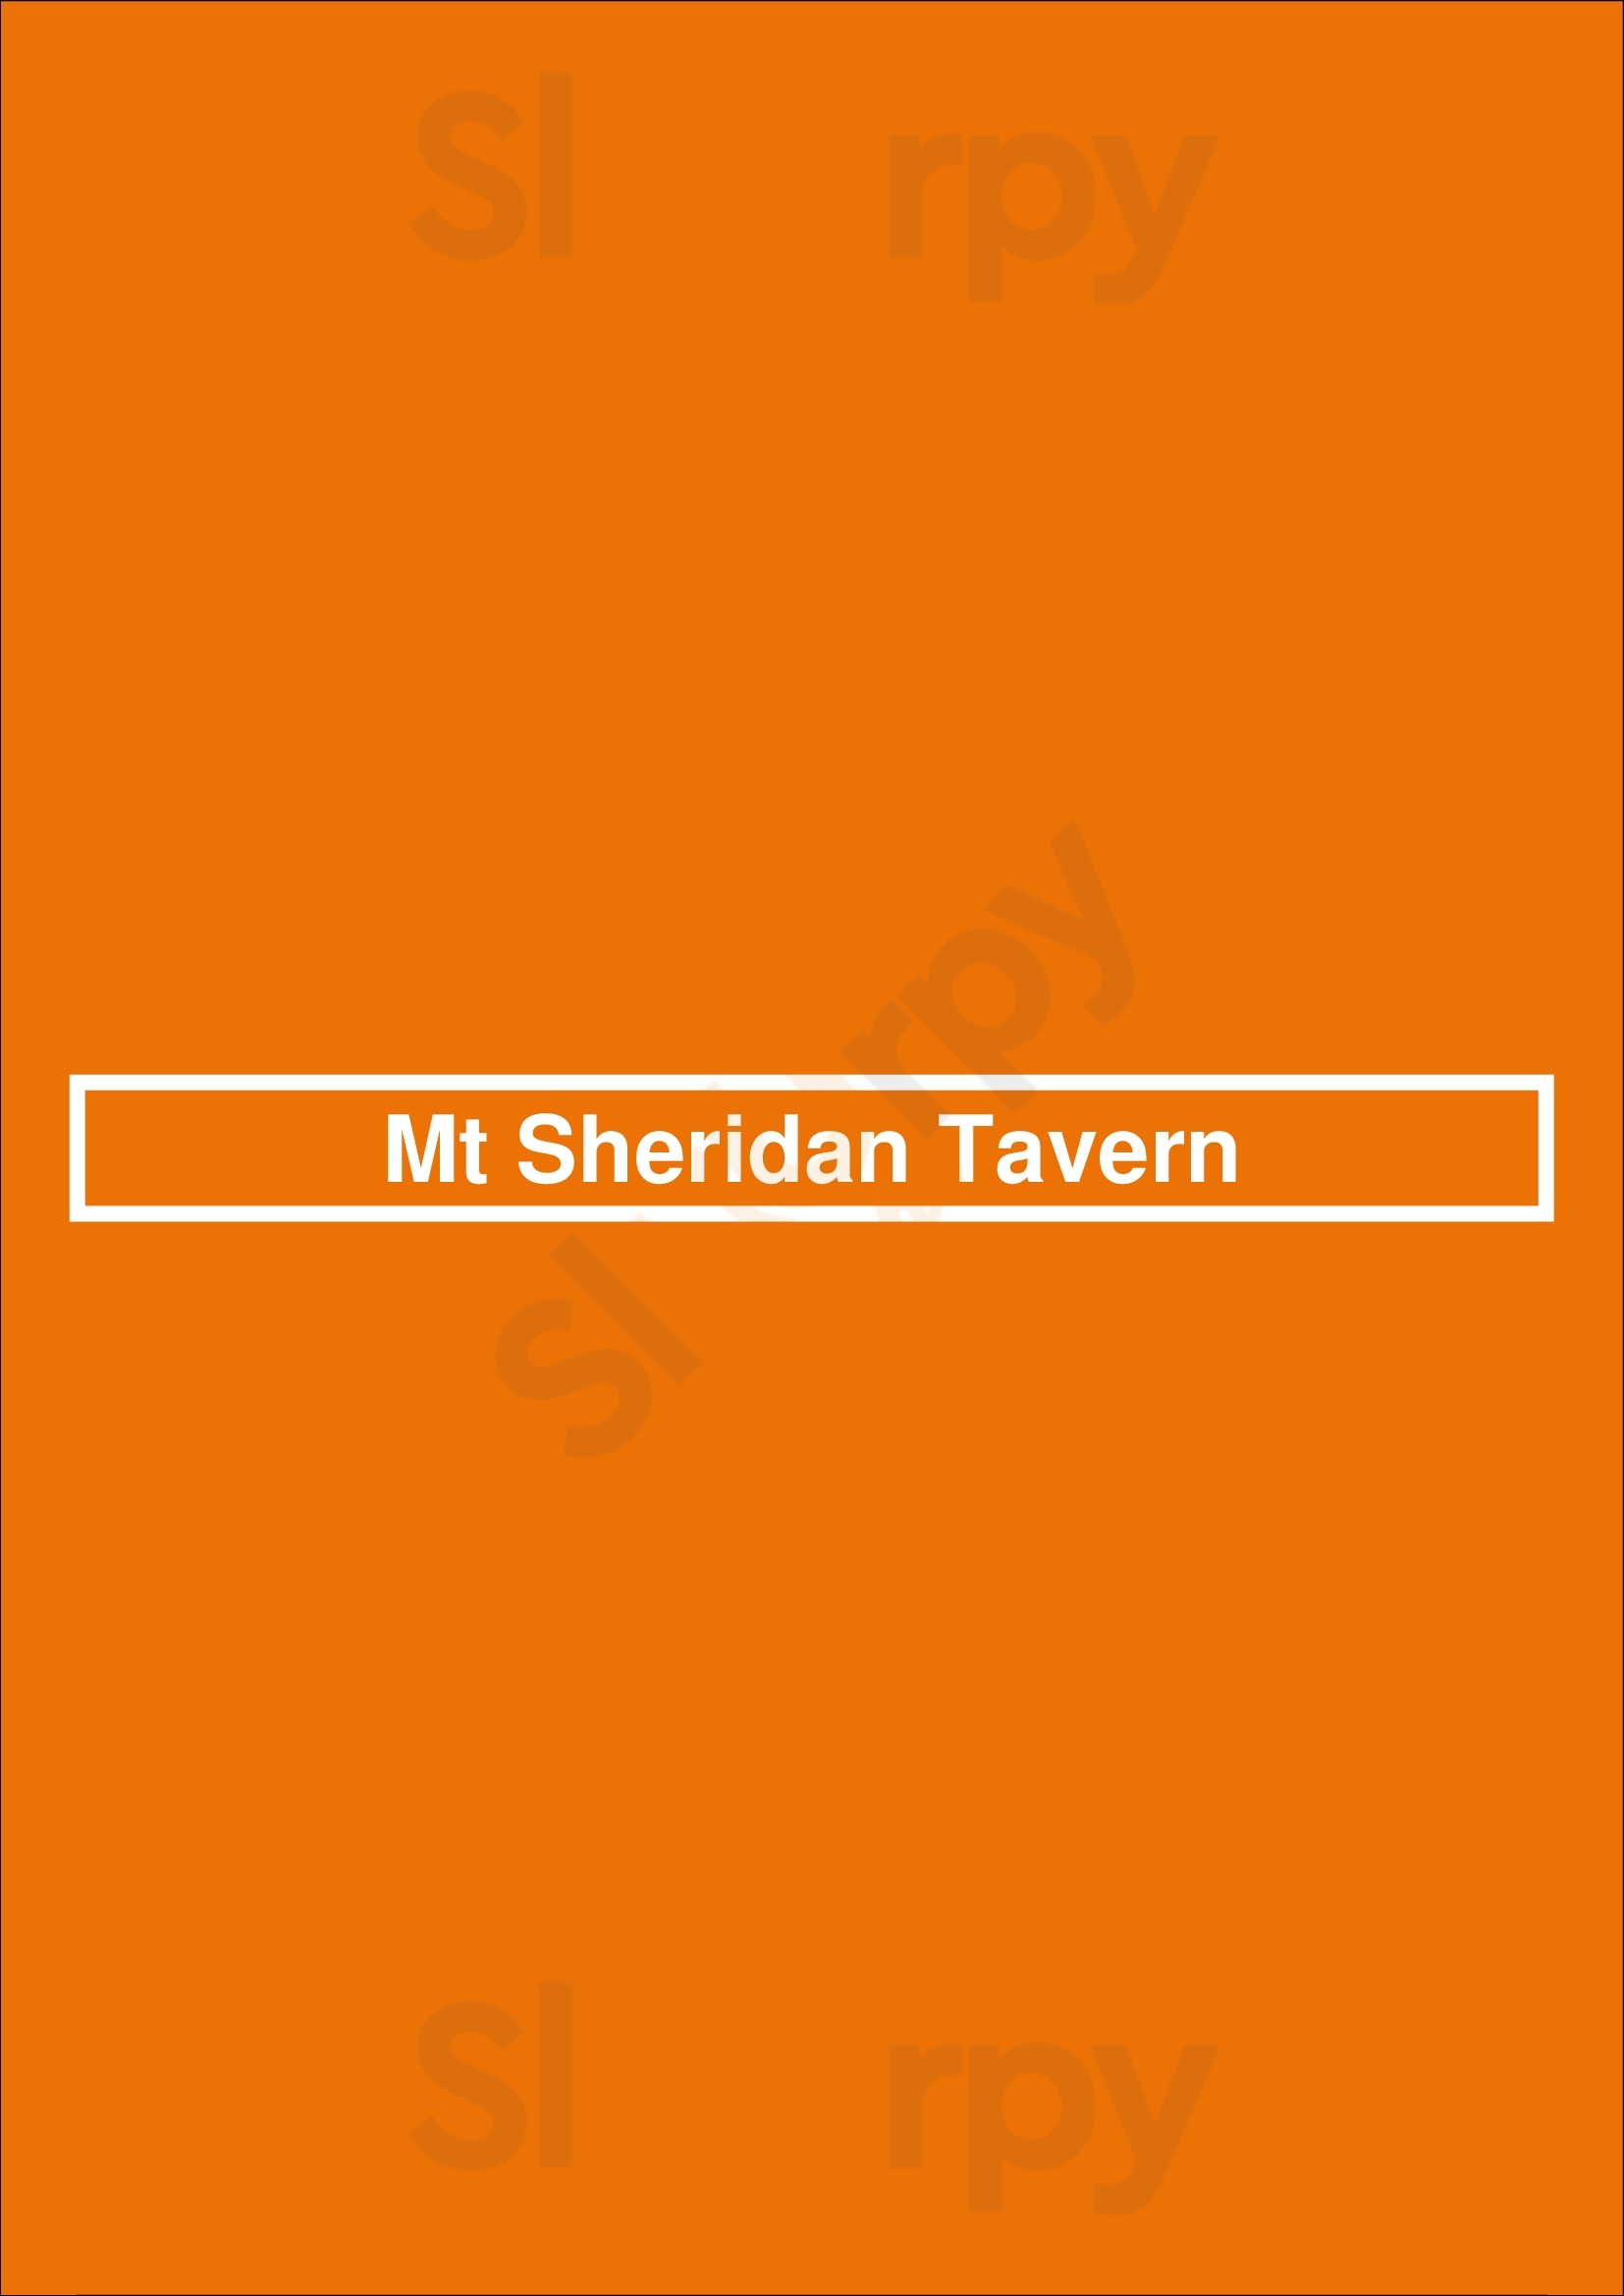 Mt Sheridan Tavern Cairns Menu - 1